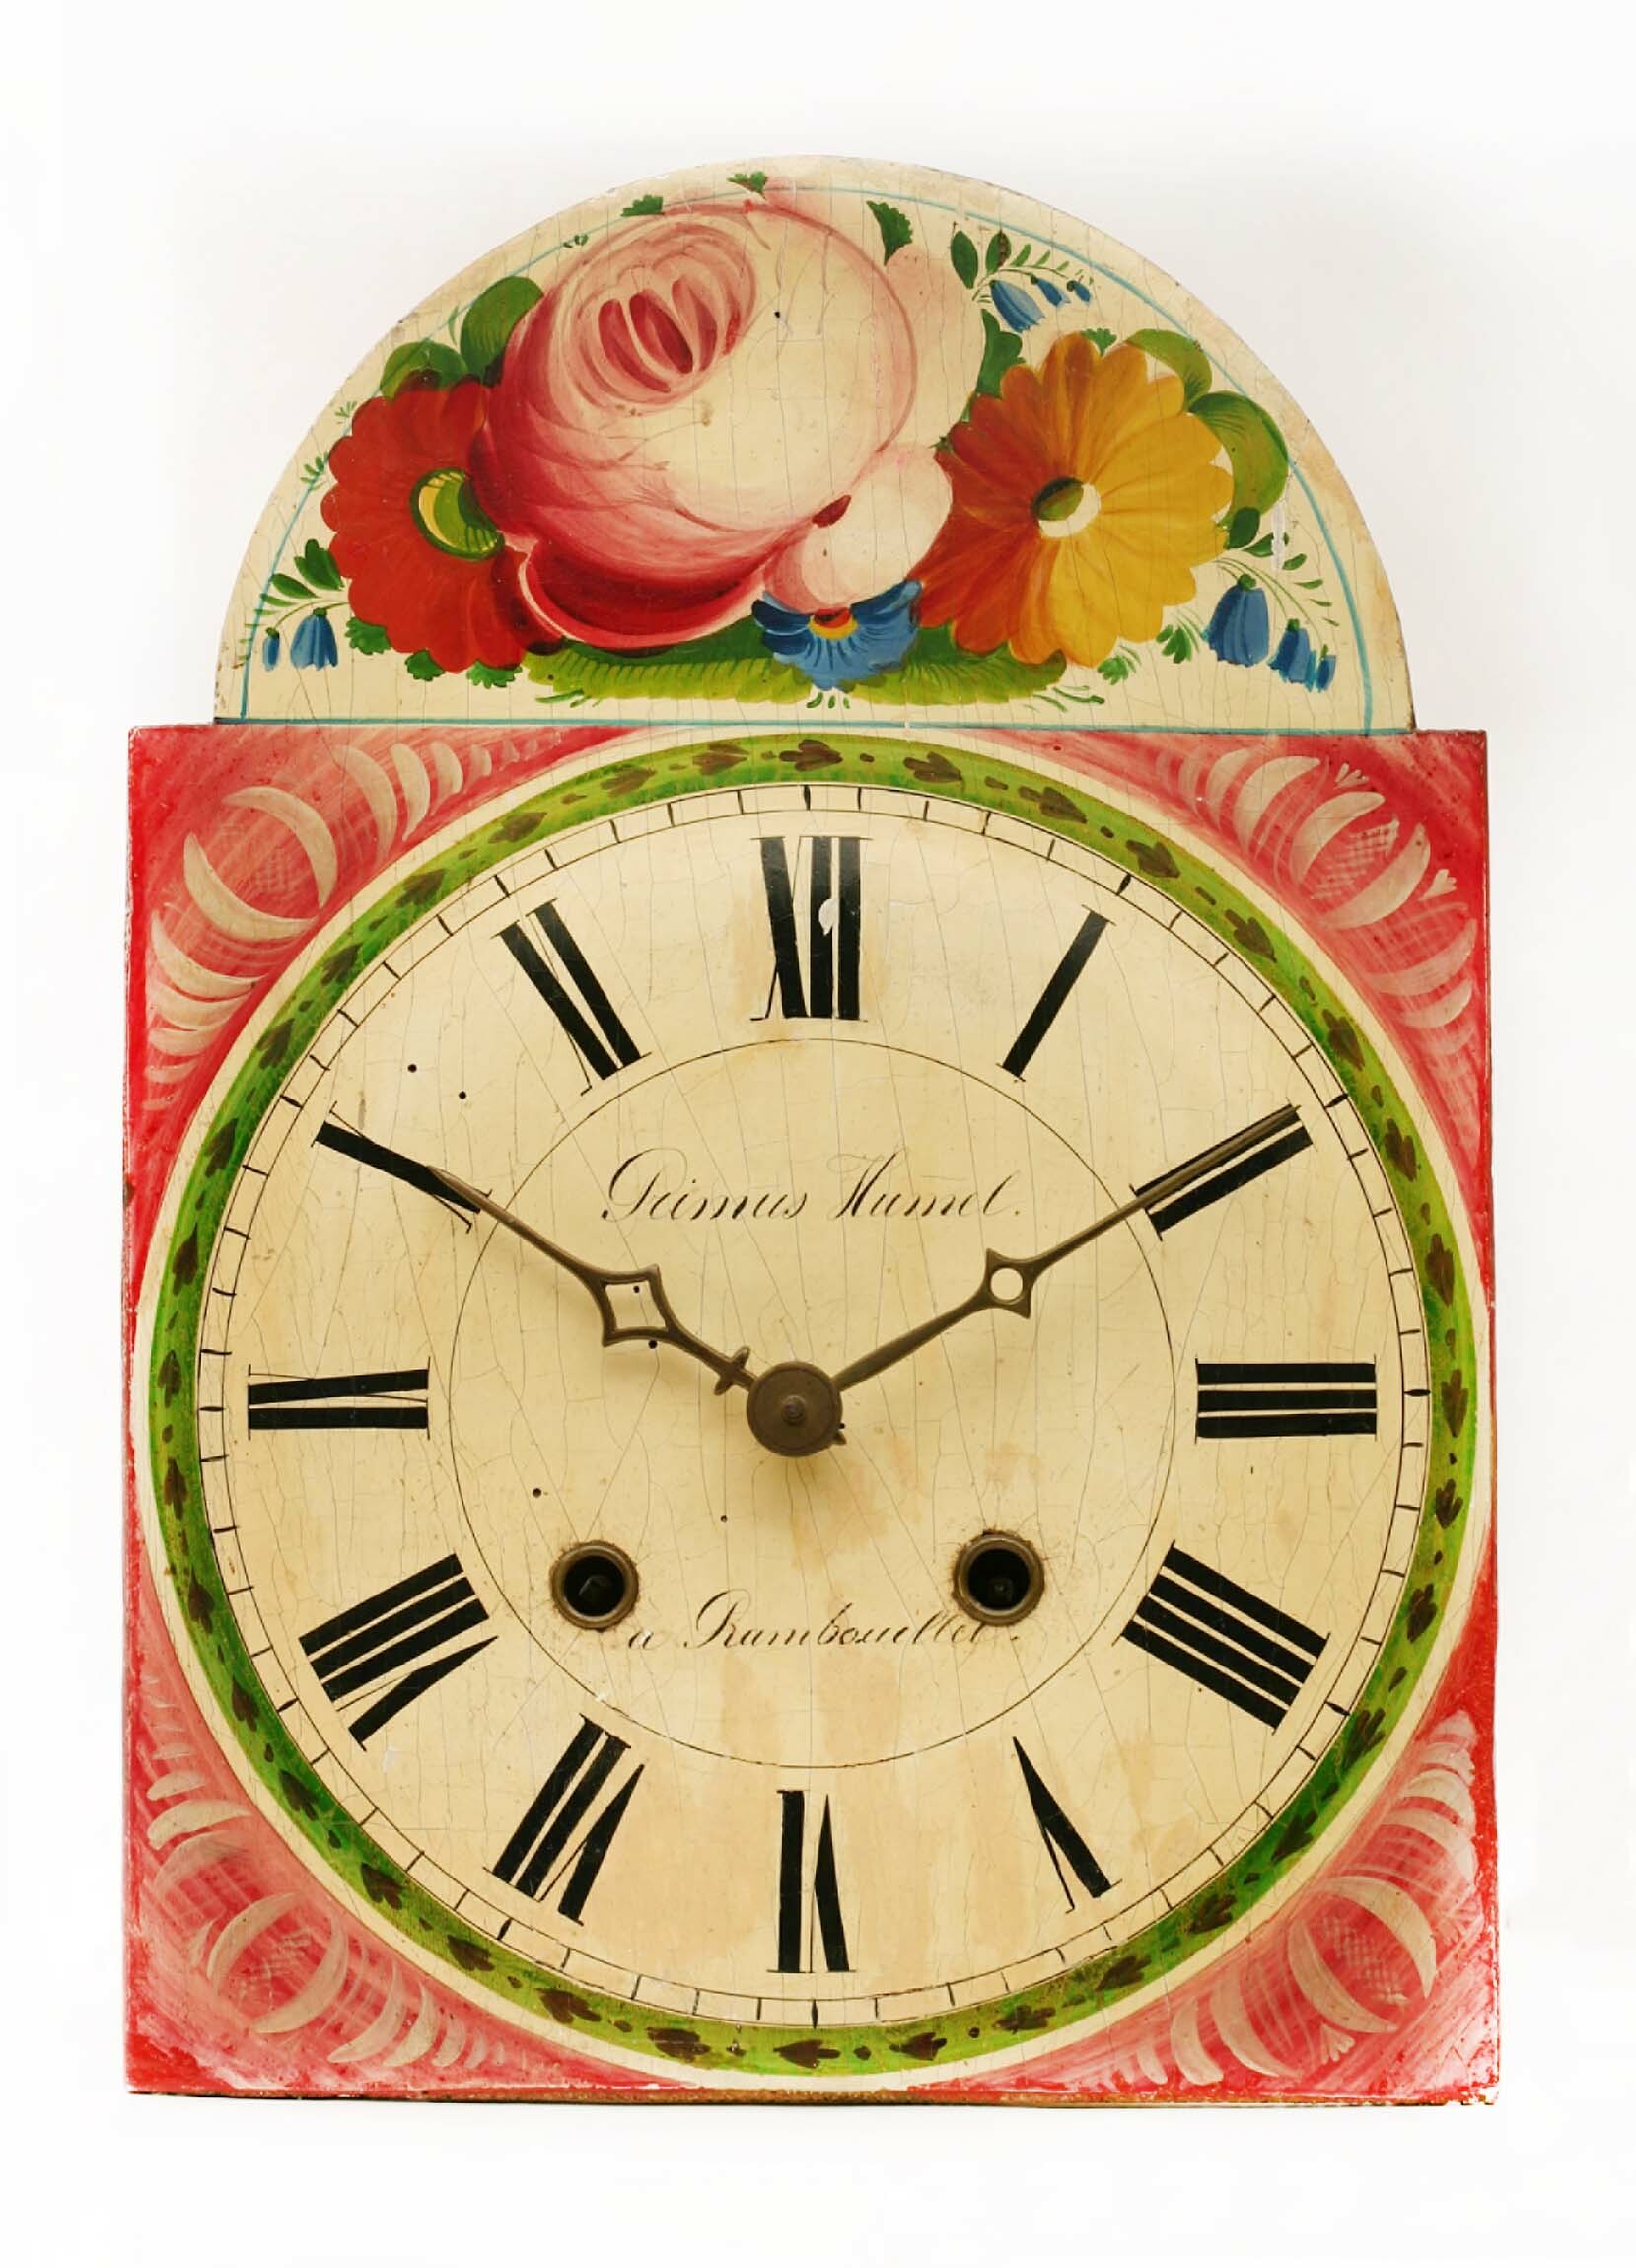 Lackschilduhr, Joseph Hummel, Furtwangen, um 1840 (Deutsches Uhrenmuseum CC BY-SA)